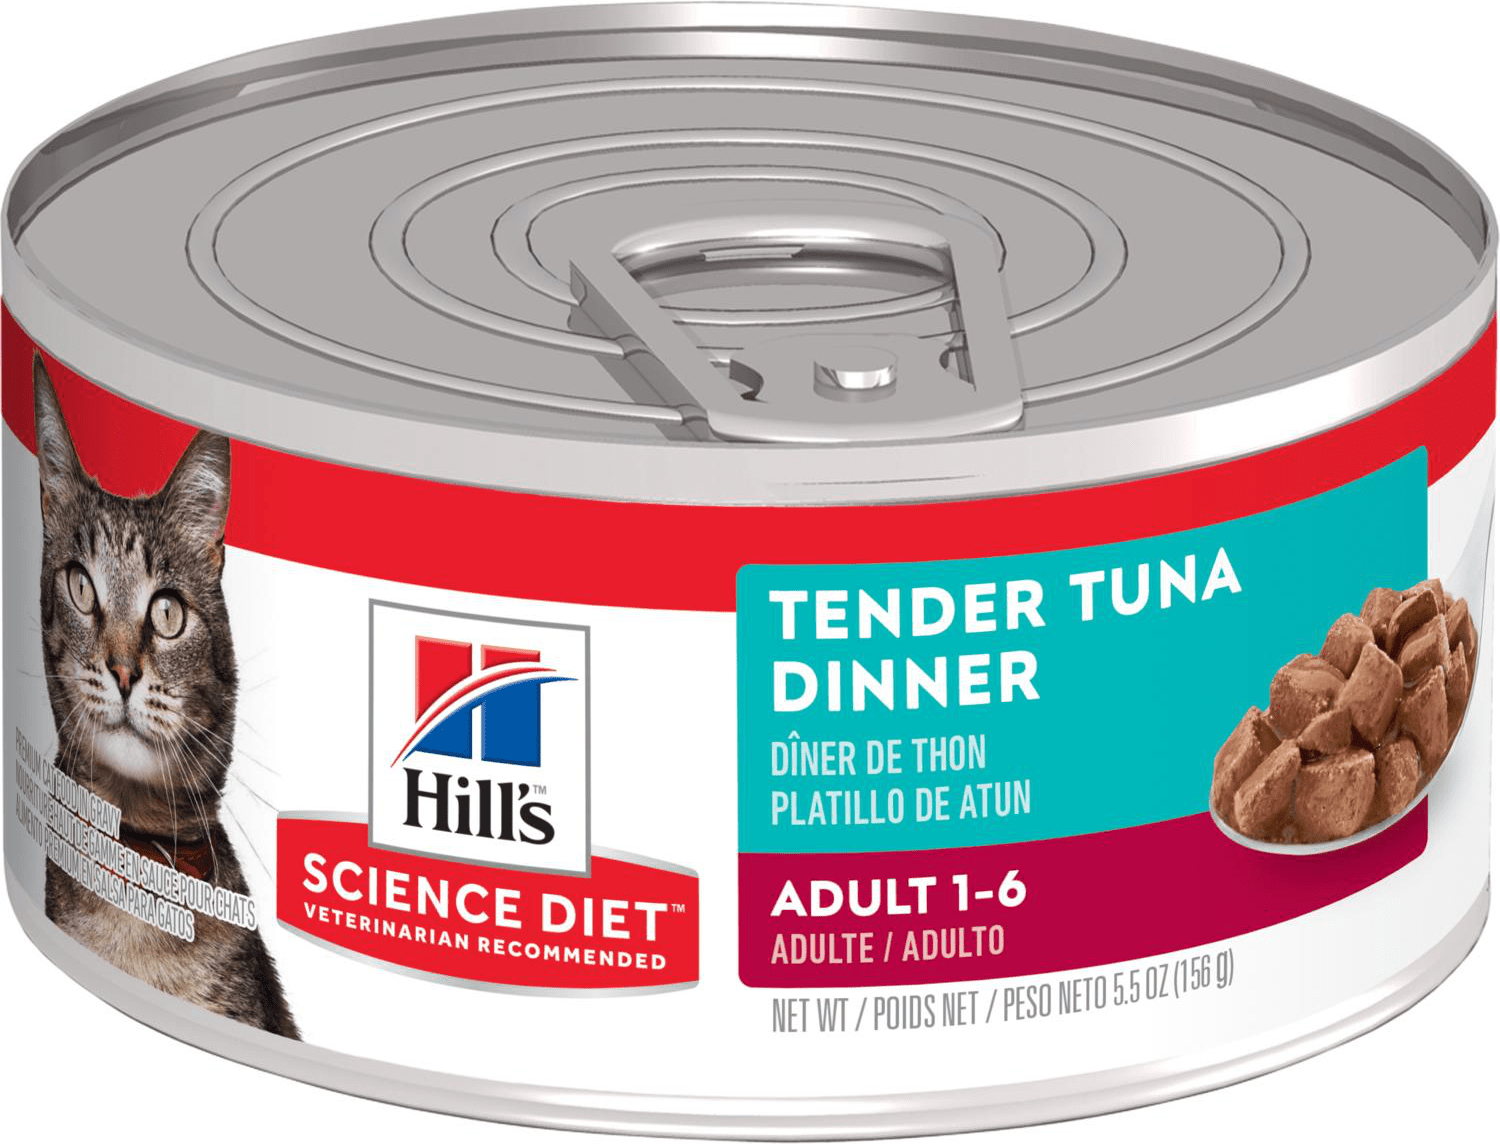 Hill's Science Diet Adult Tender Tuna Dinner